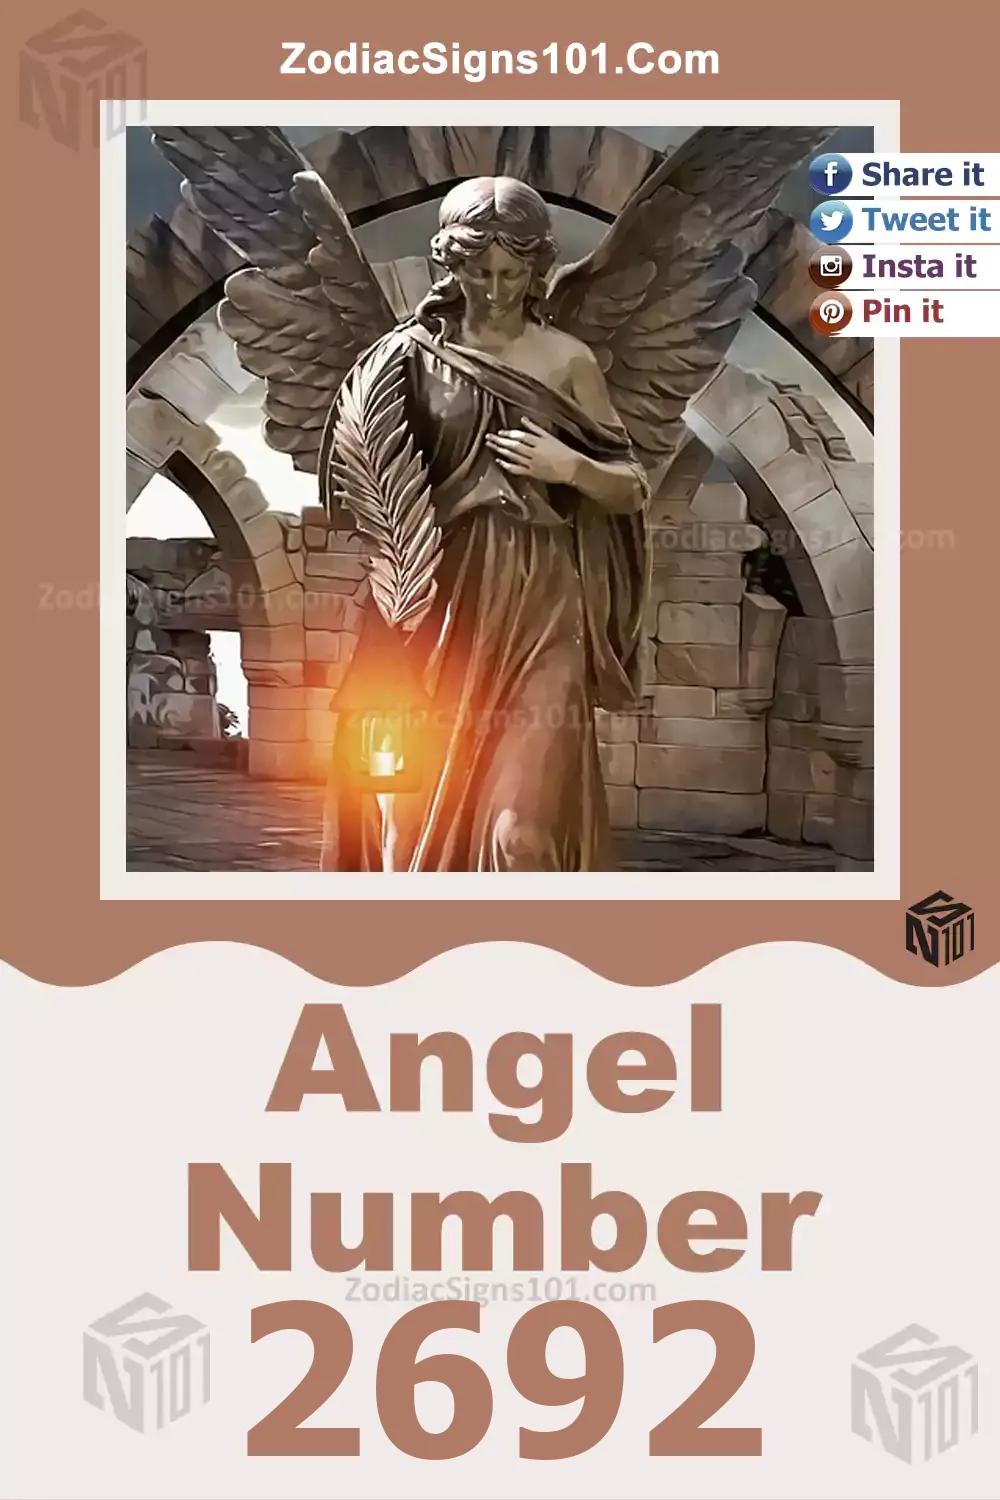 2692-Angel-Number-Meaning.jpg